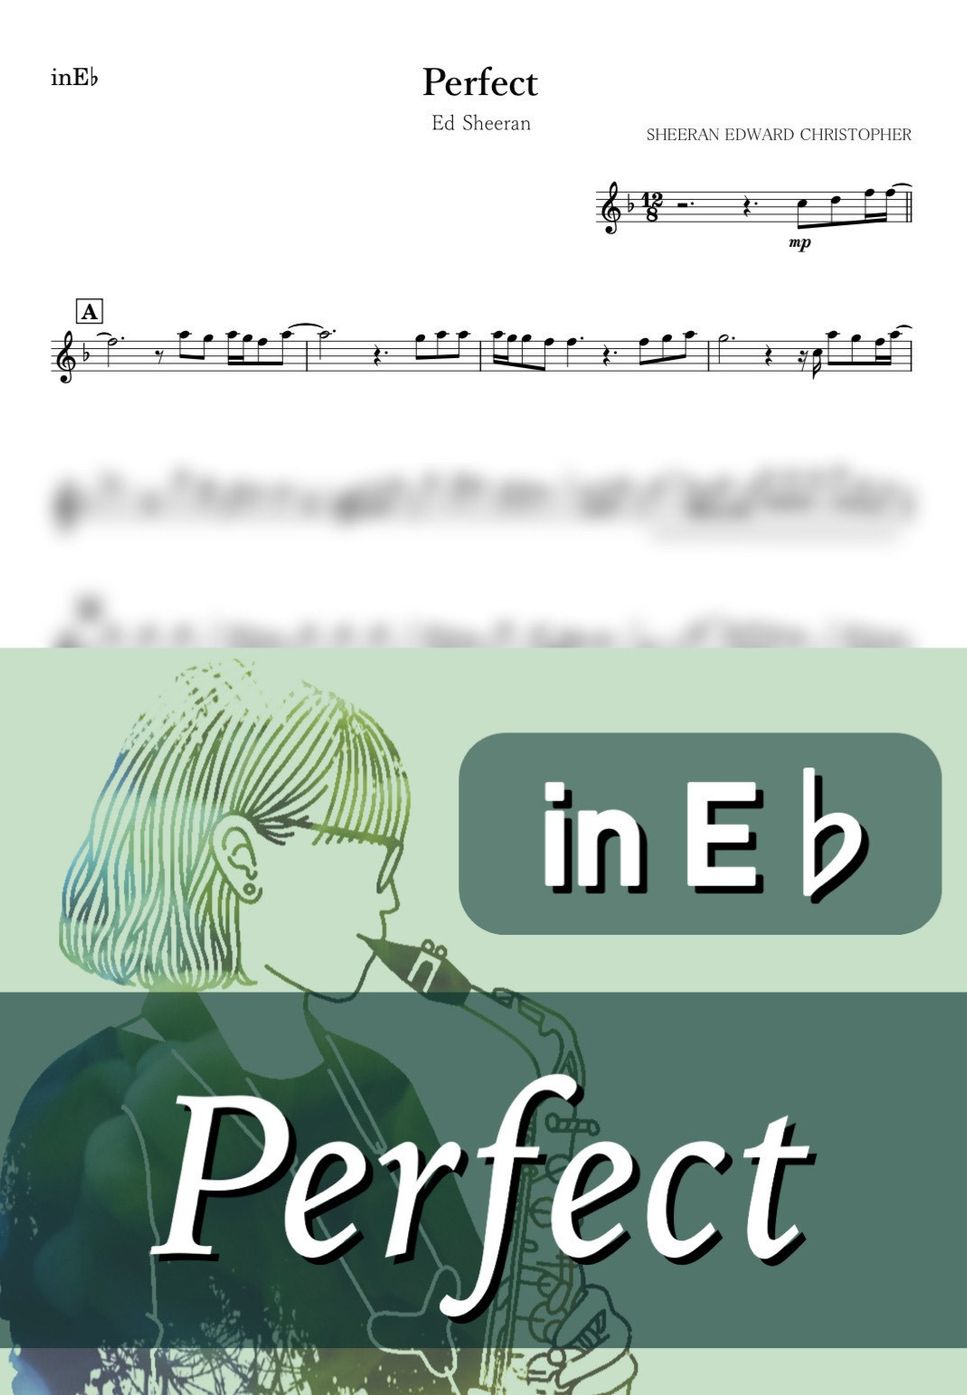 Ed Sheeran - Perfect (E♭) by kanamusic